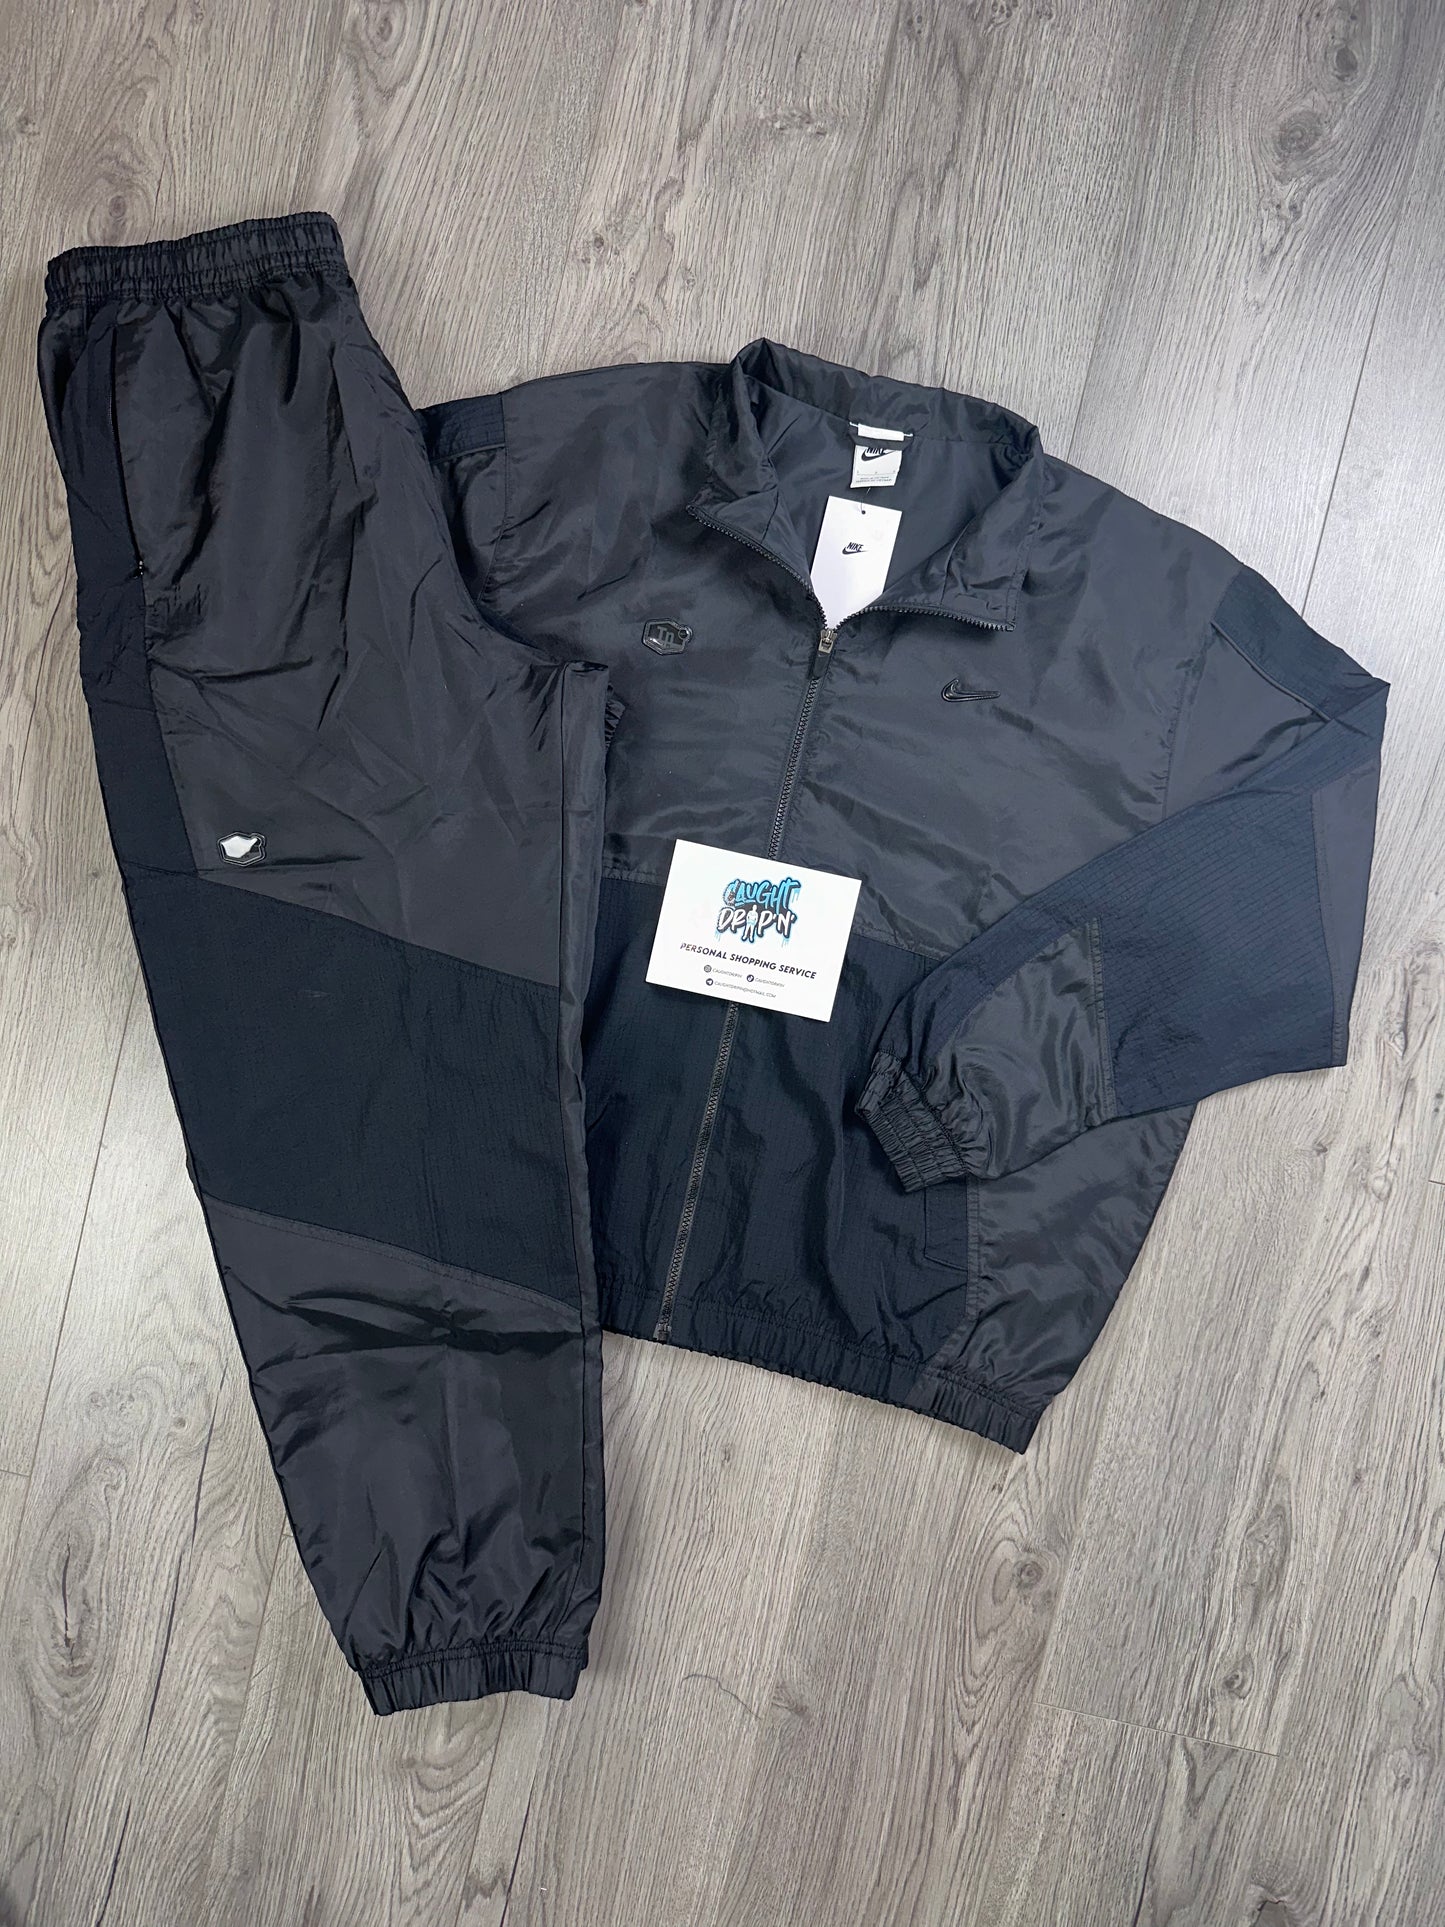 Nike TN 25th Anniversary Tracksuit Black (Oversized Fit)